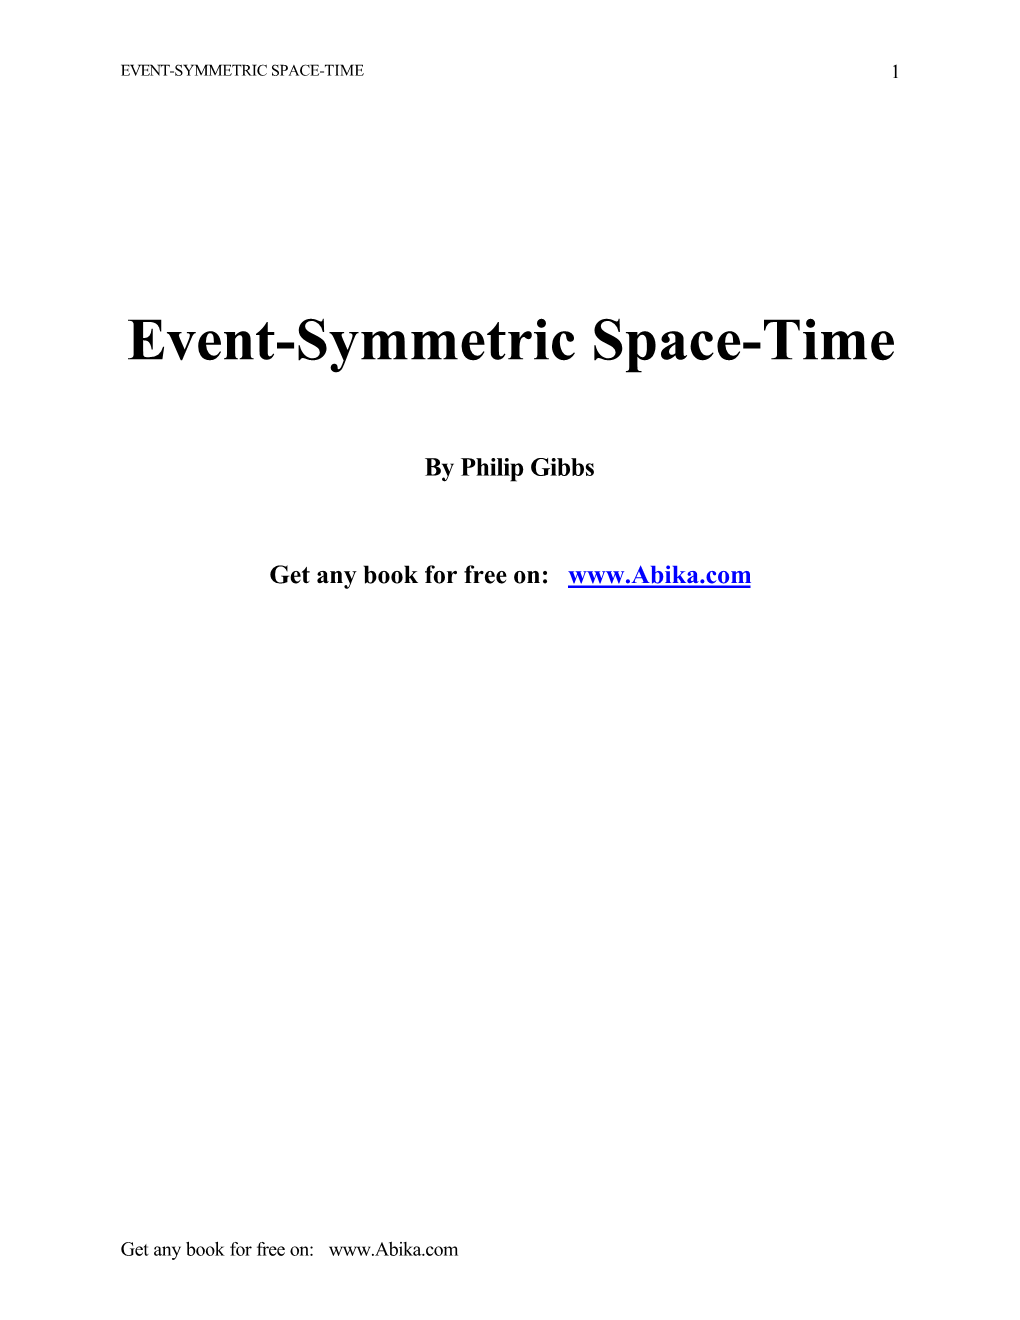 Event-Symmetric Space-Time 1